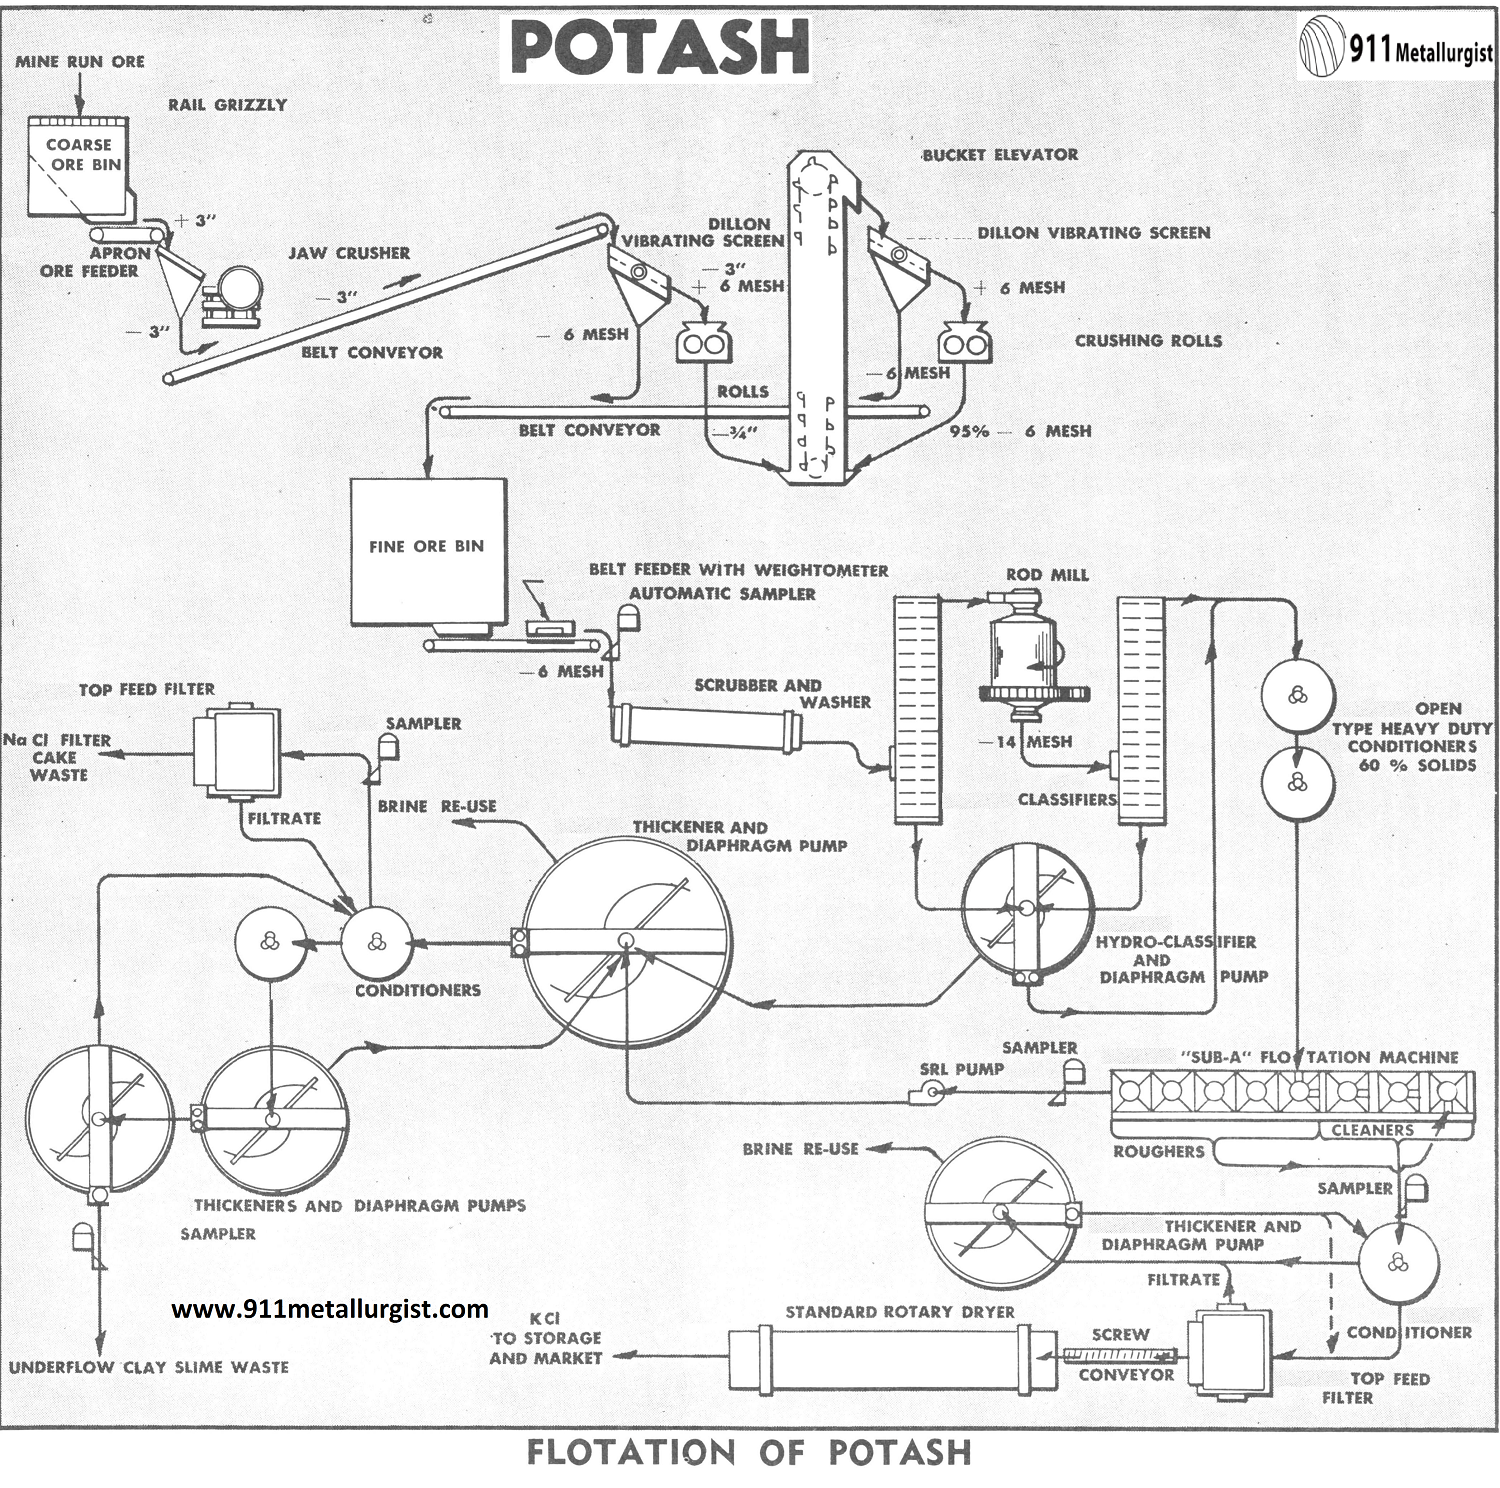 Flotation of Potash